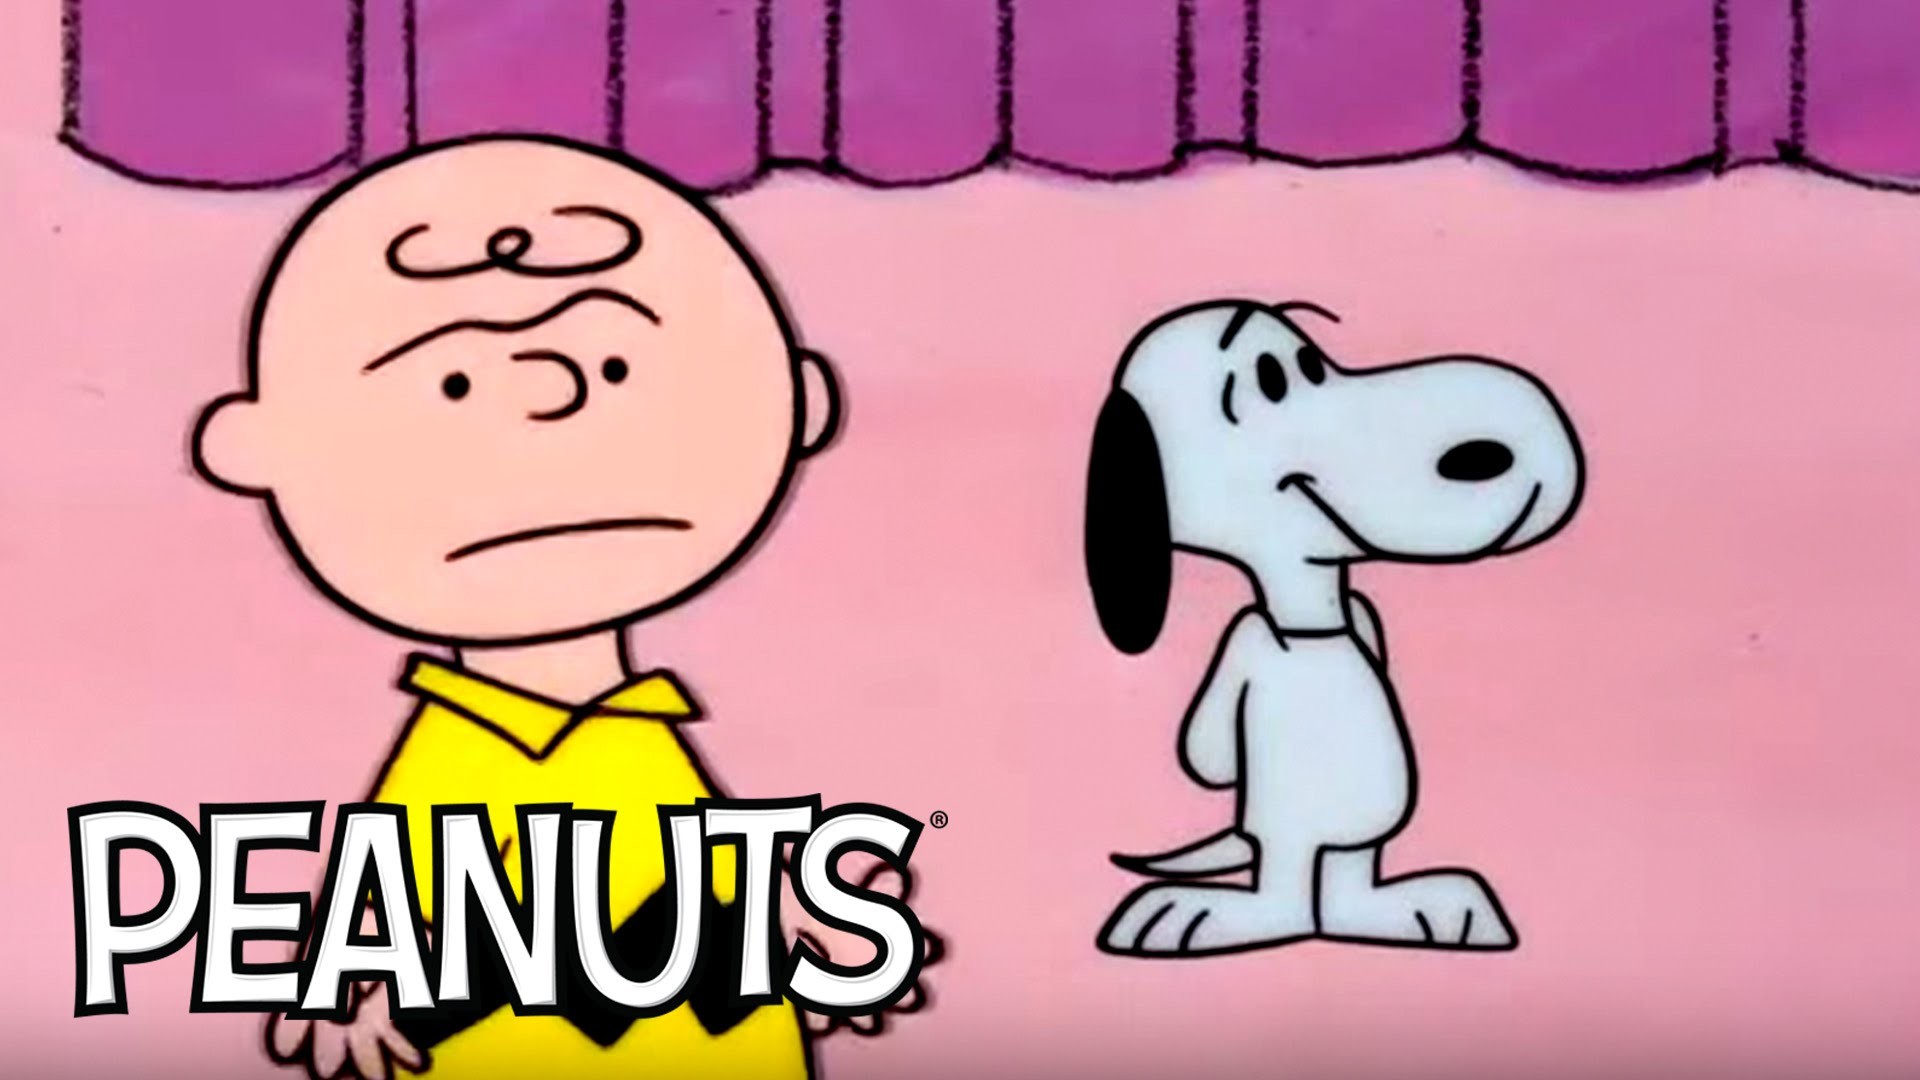 Charlie Brown Director